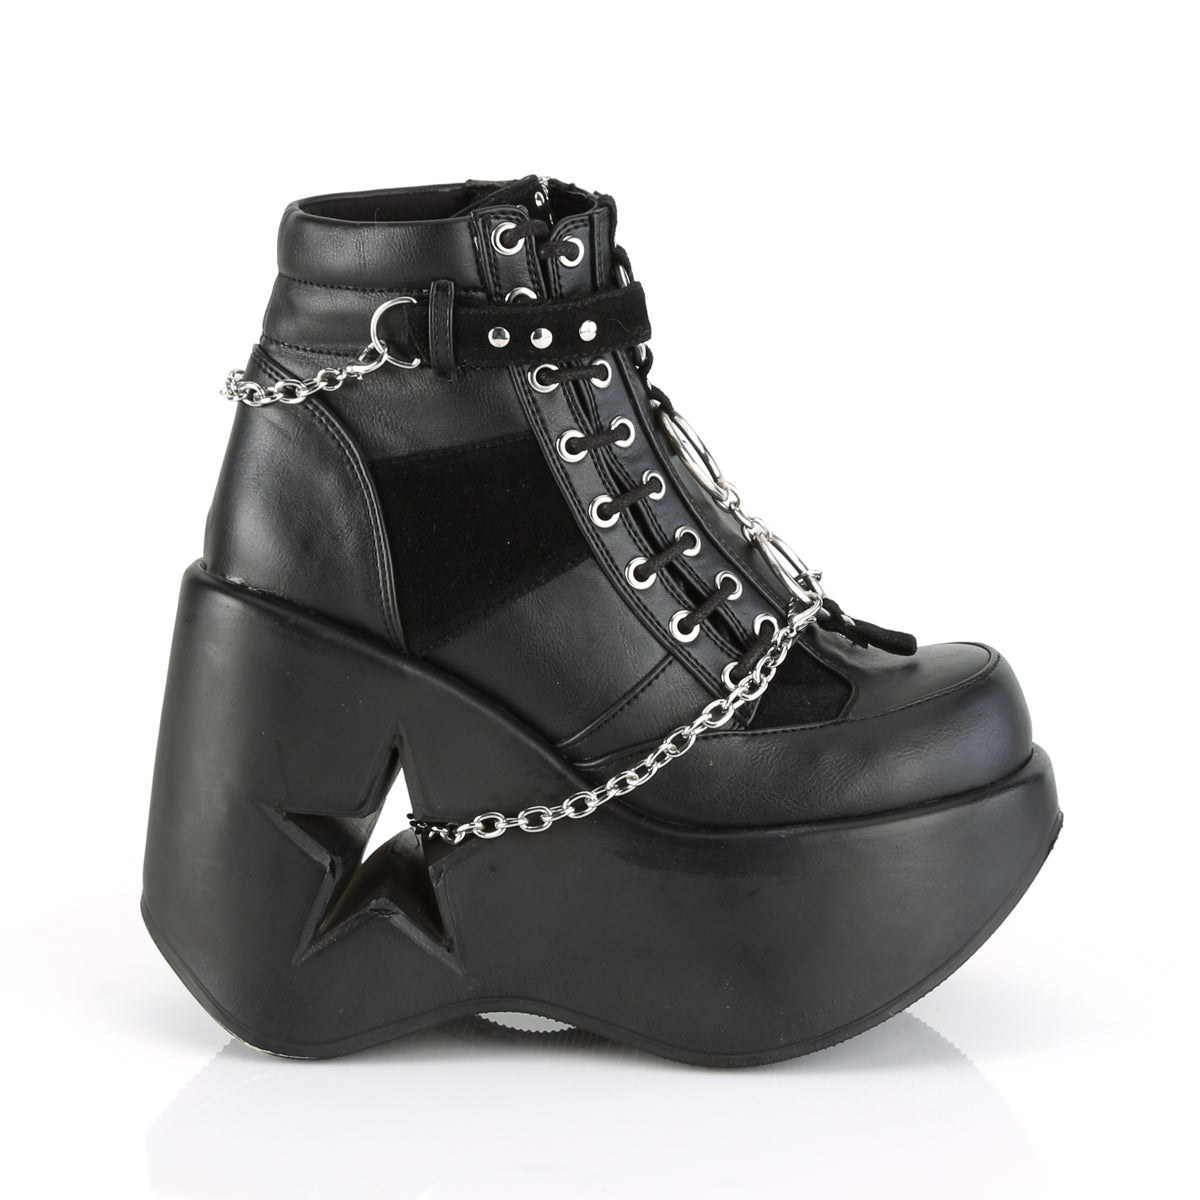 DYNAMITE-101 Demonia Black Vegan Leather-Vegan Suede Women's Ankle Boots [Demonia Cult Alternative Footwear]